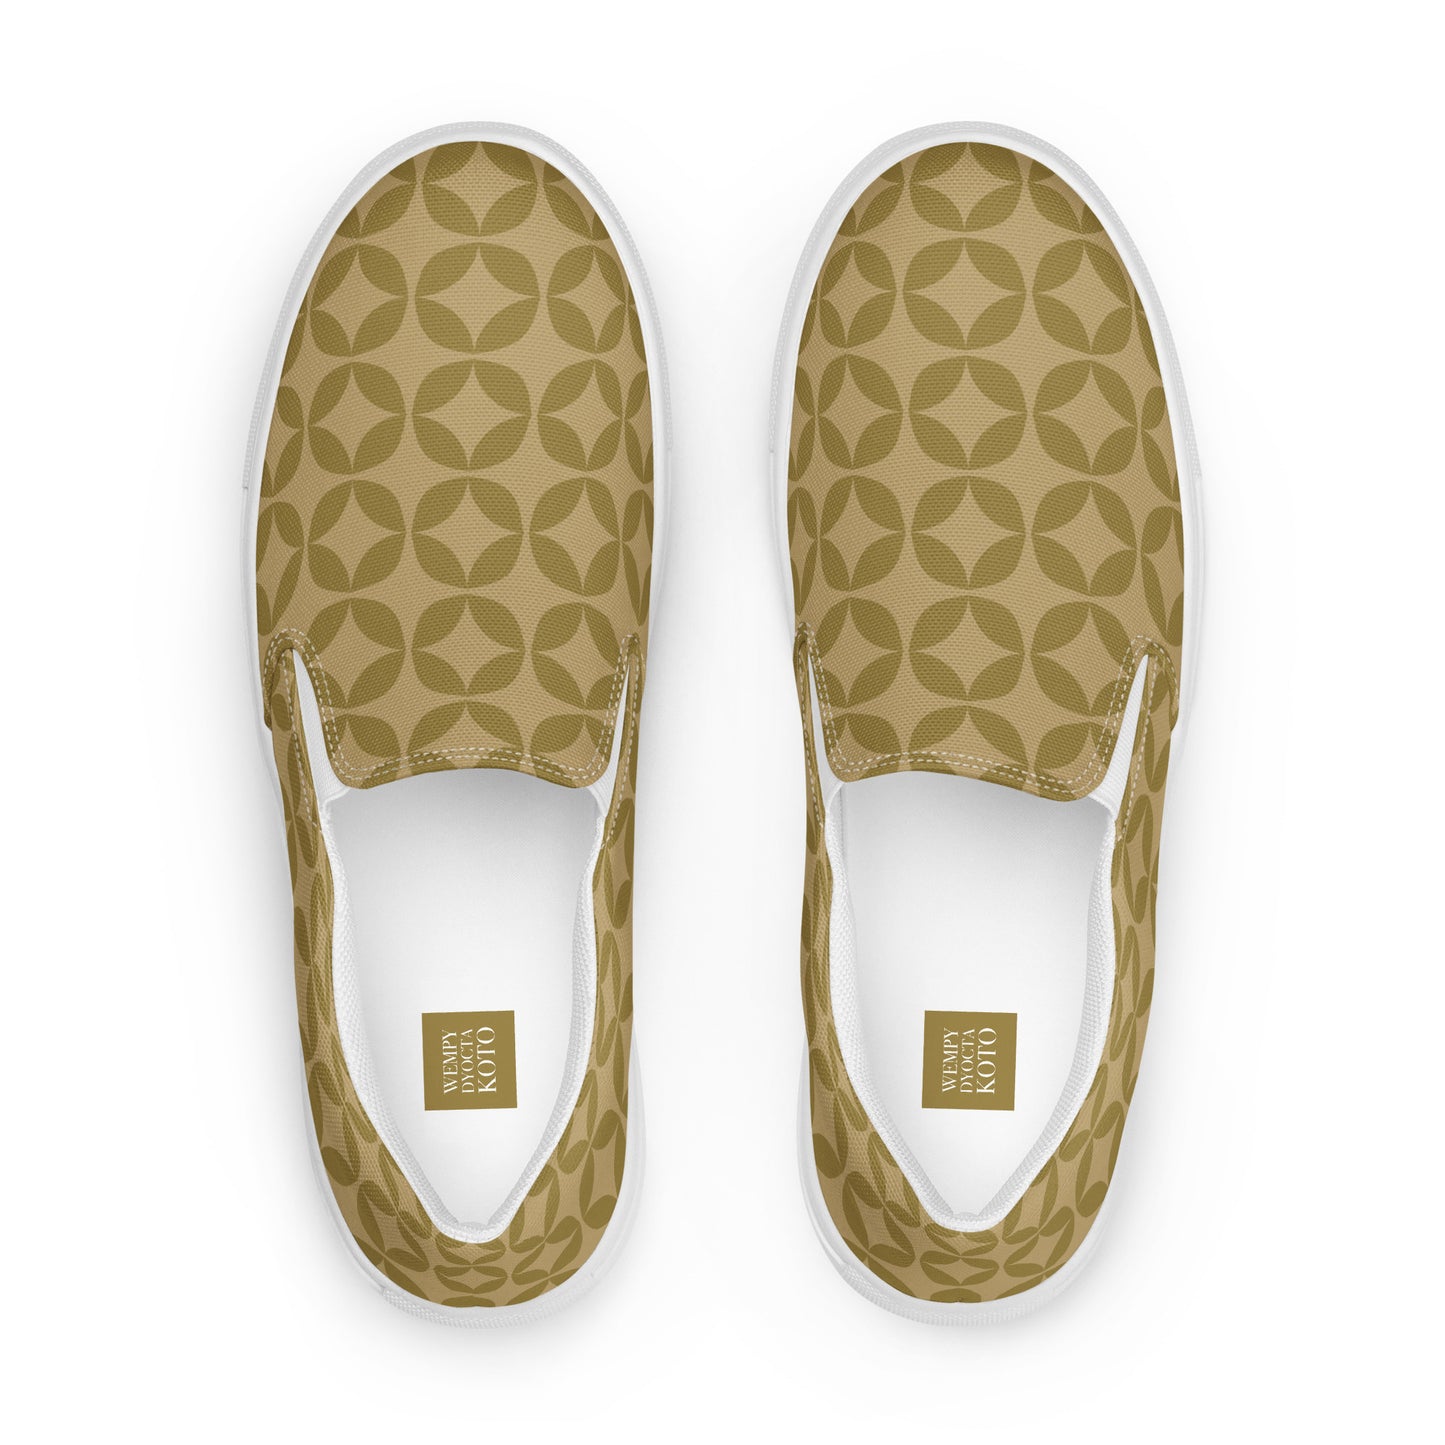 Wempy Dyocta Koto Signature Luxury - Sustainably Made Women’s slip-on canvas shoes